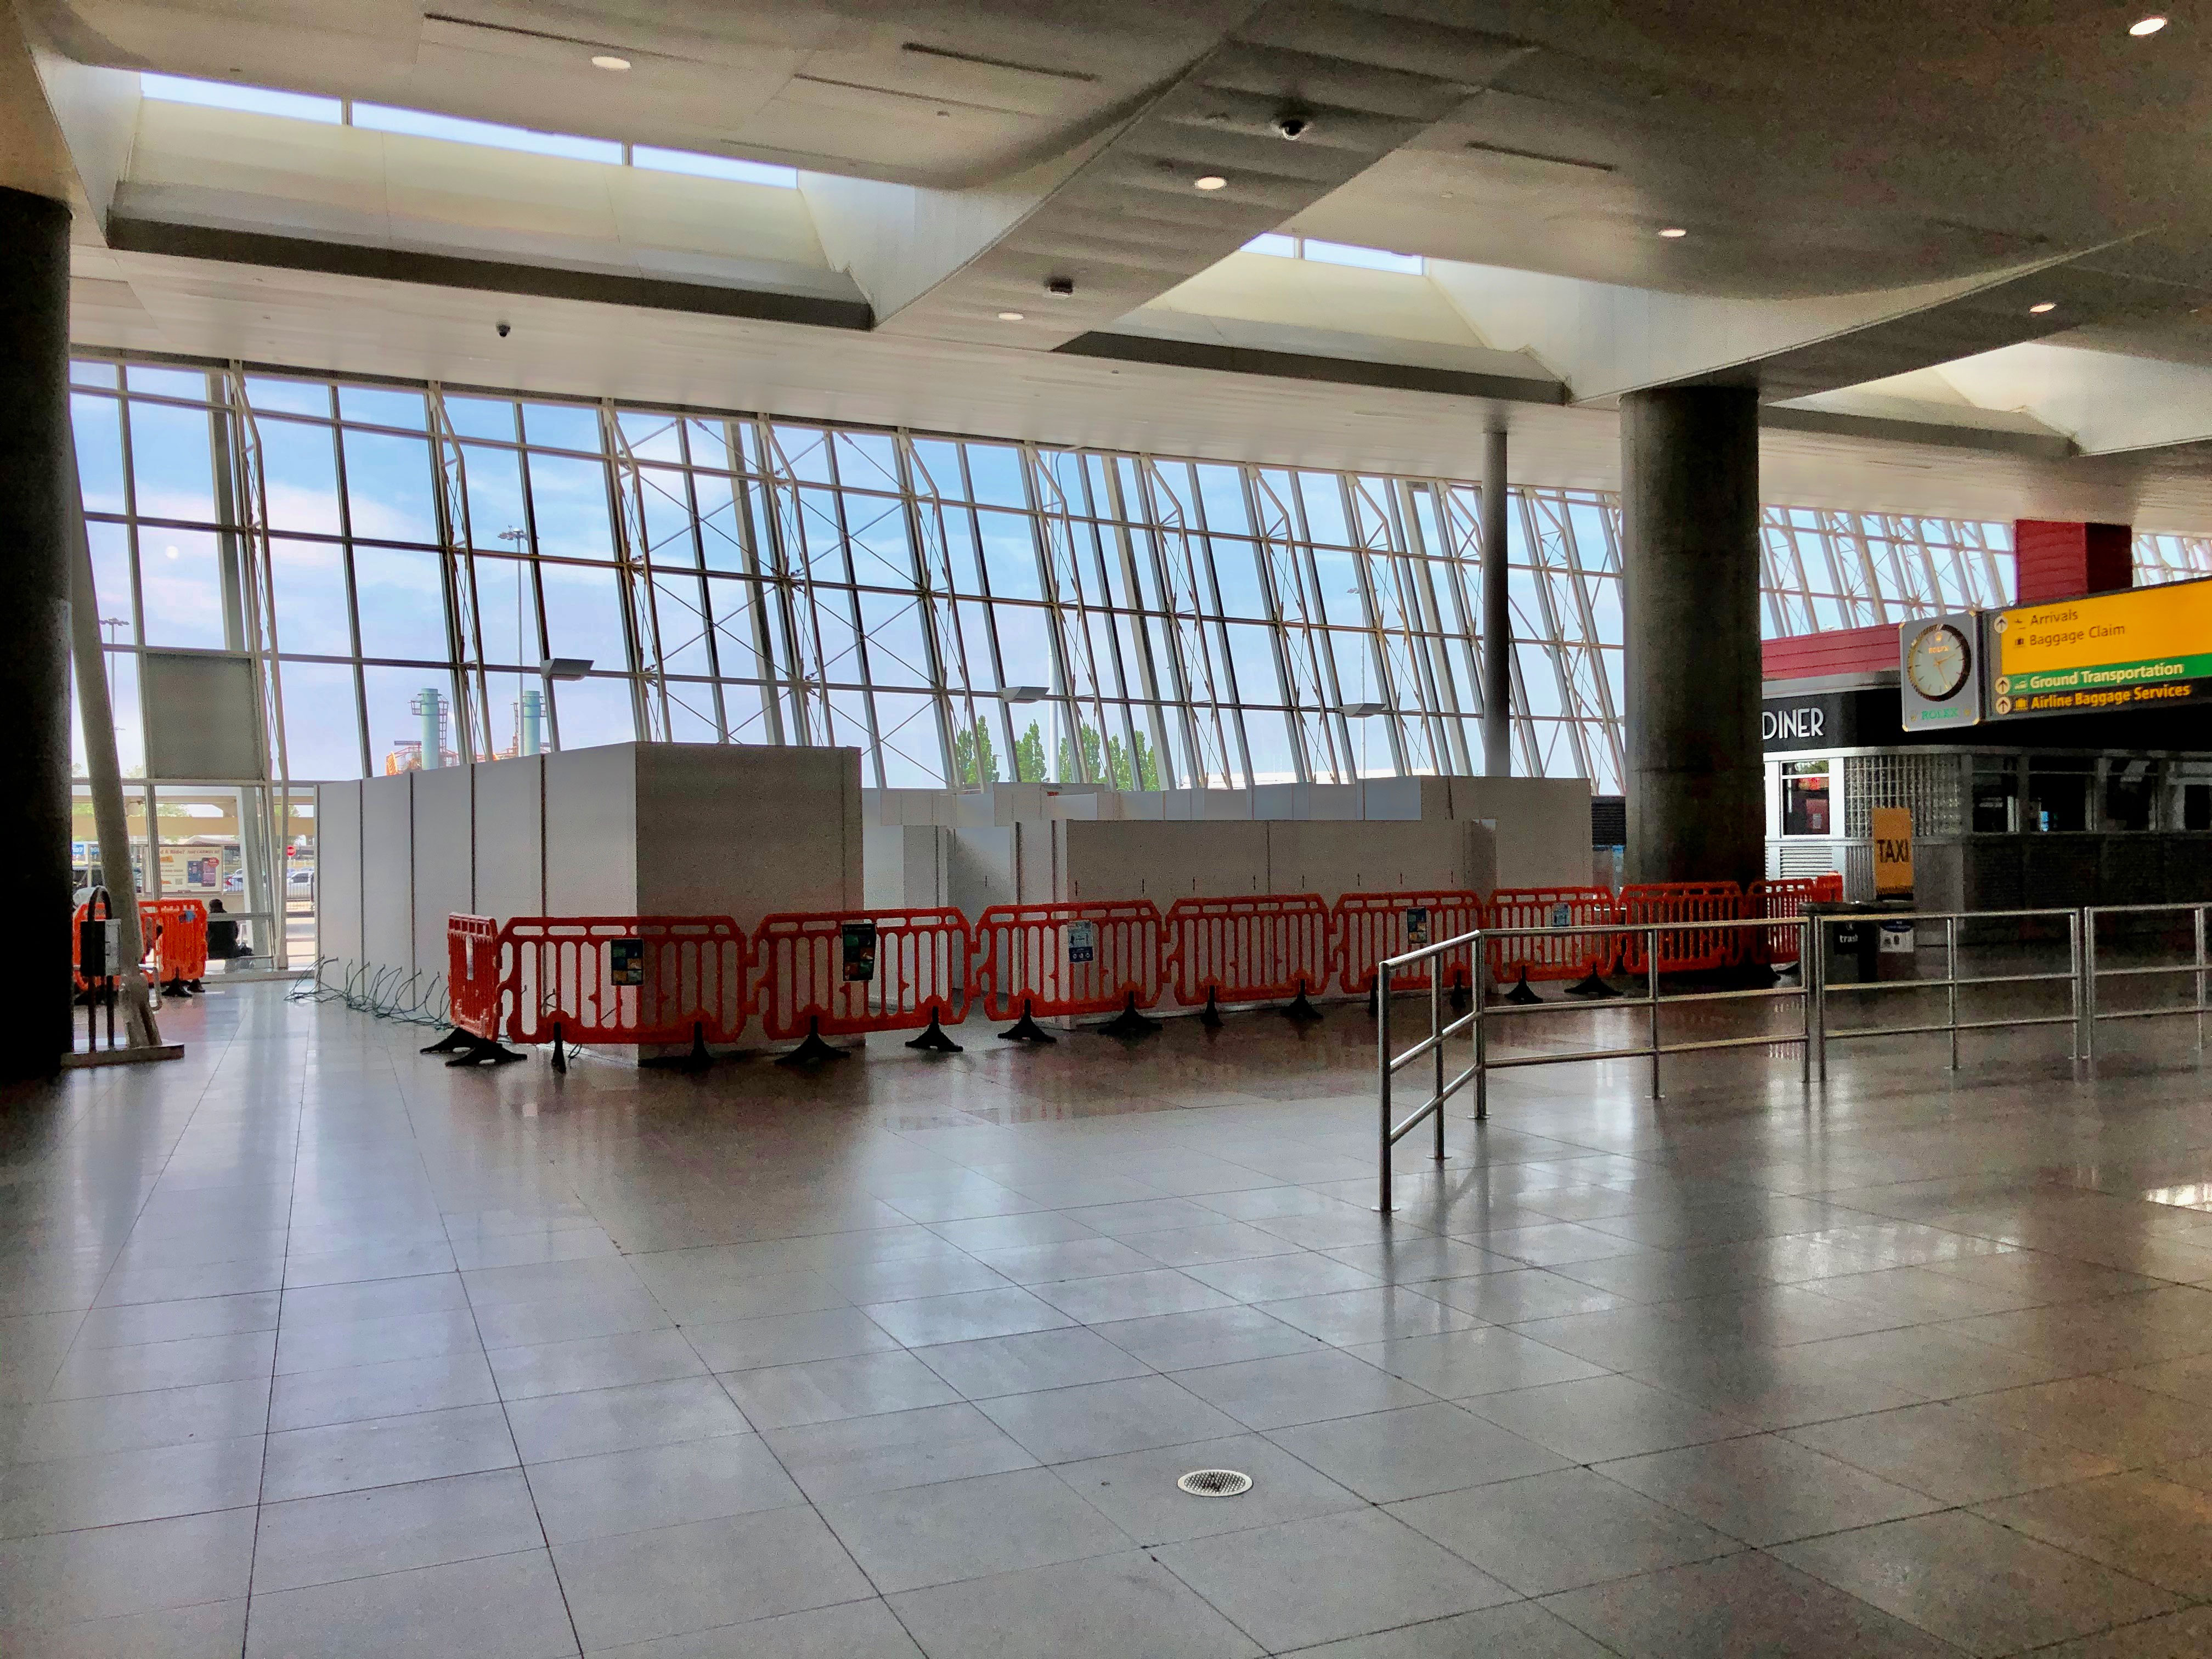 The XpresSpa testing site in Terminal 4 of JFK Airport. (Courtesy of XpresSpa)